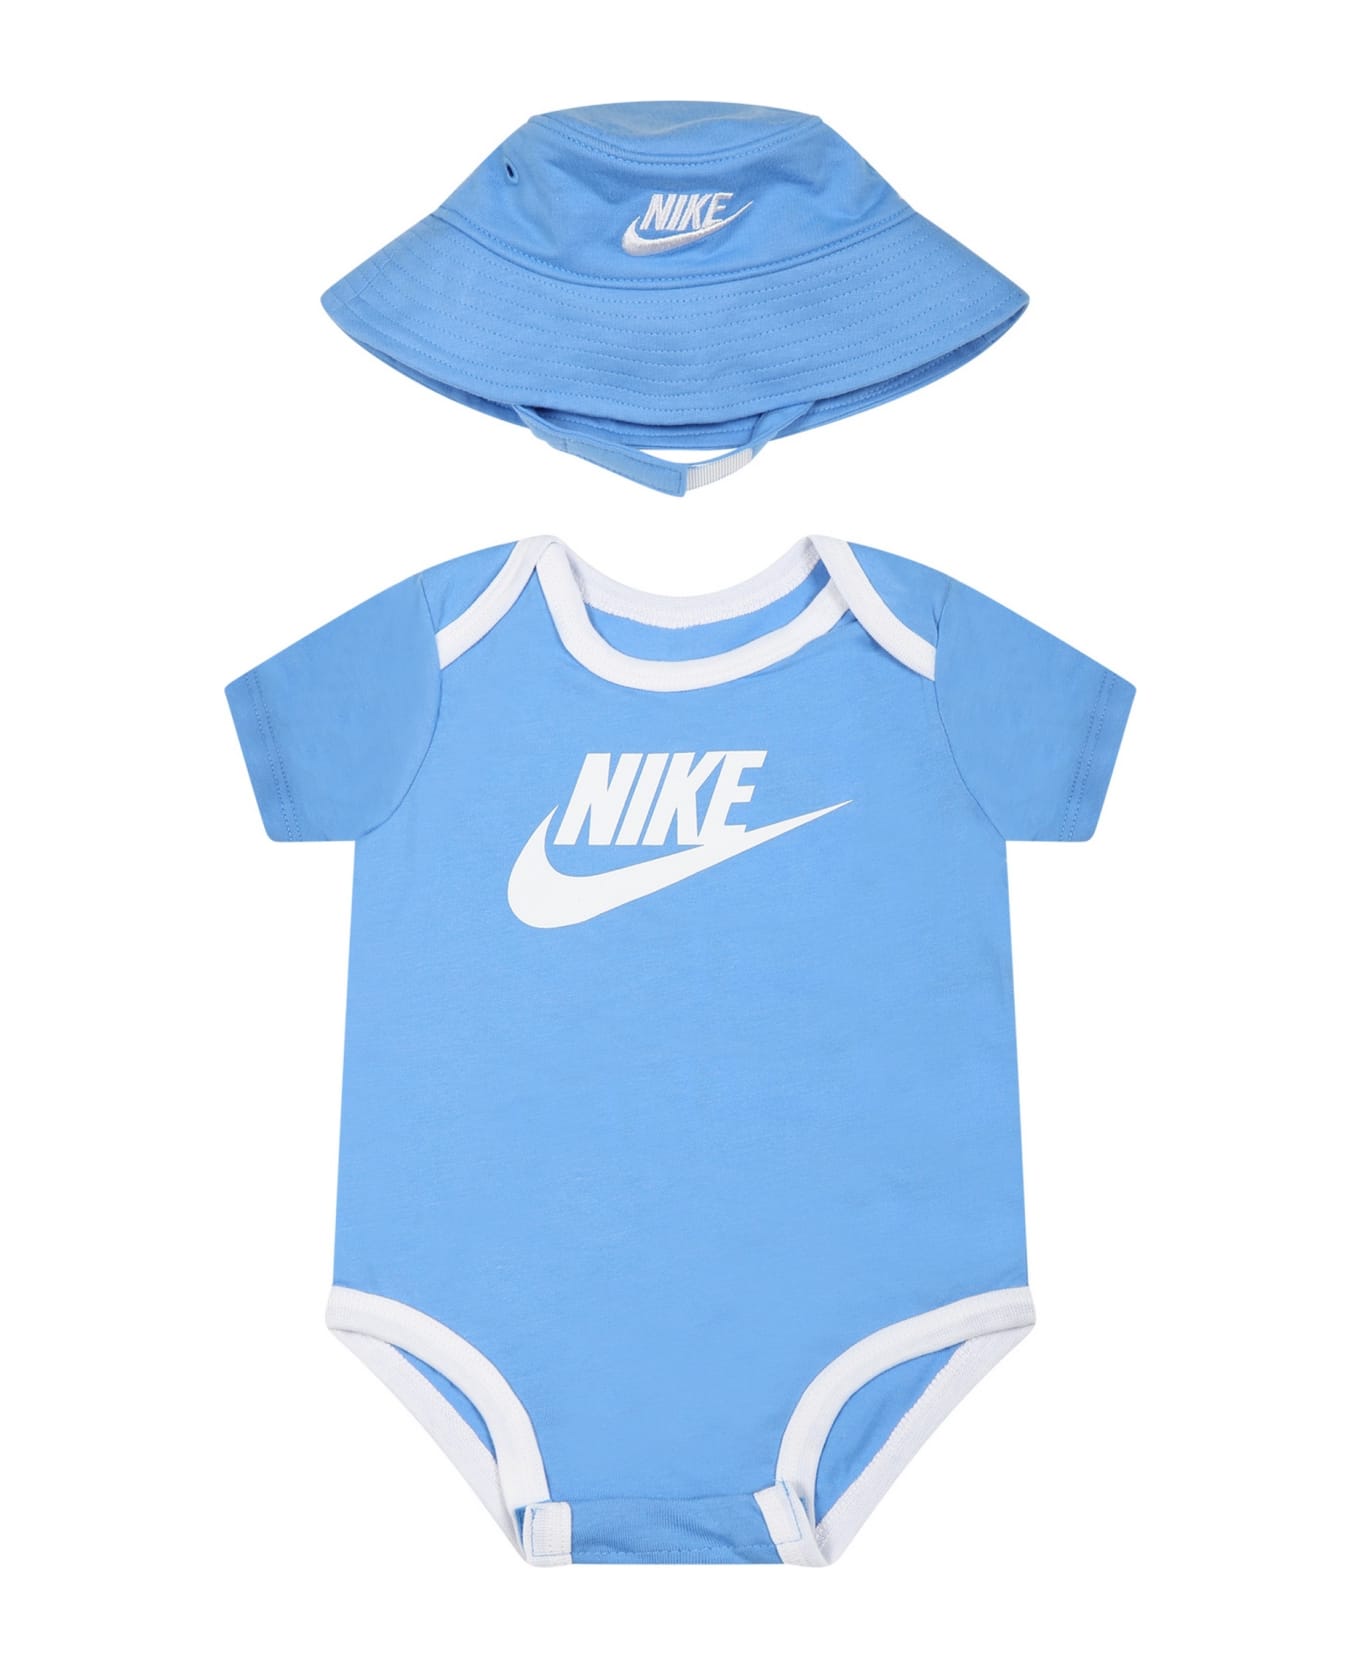 Nike Light Blue Set For Baby Boy With Iconic Swoosh - Light Blue